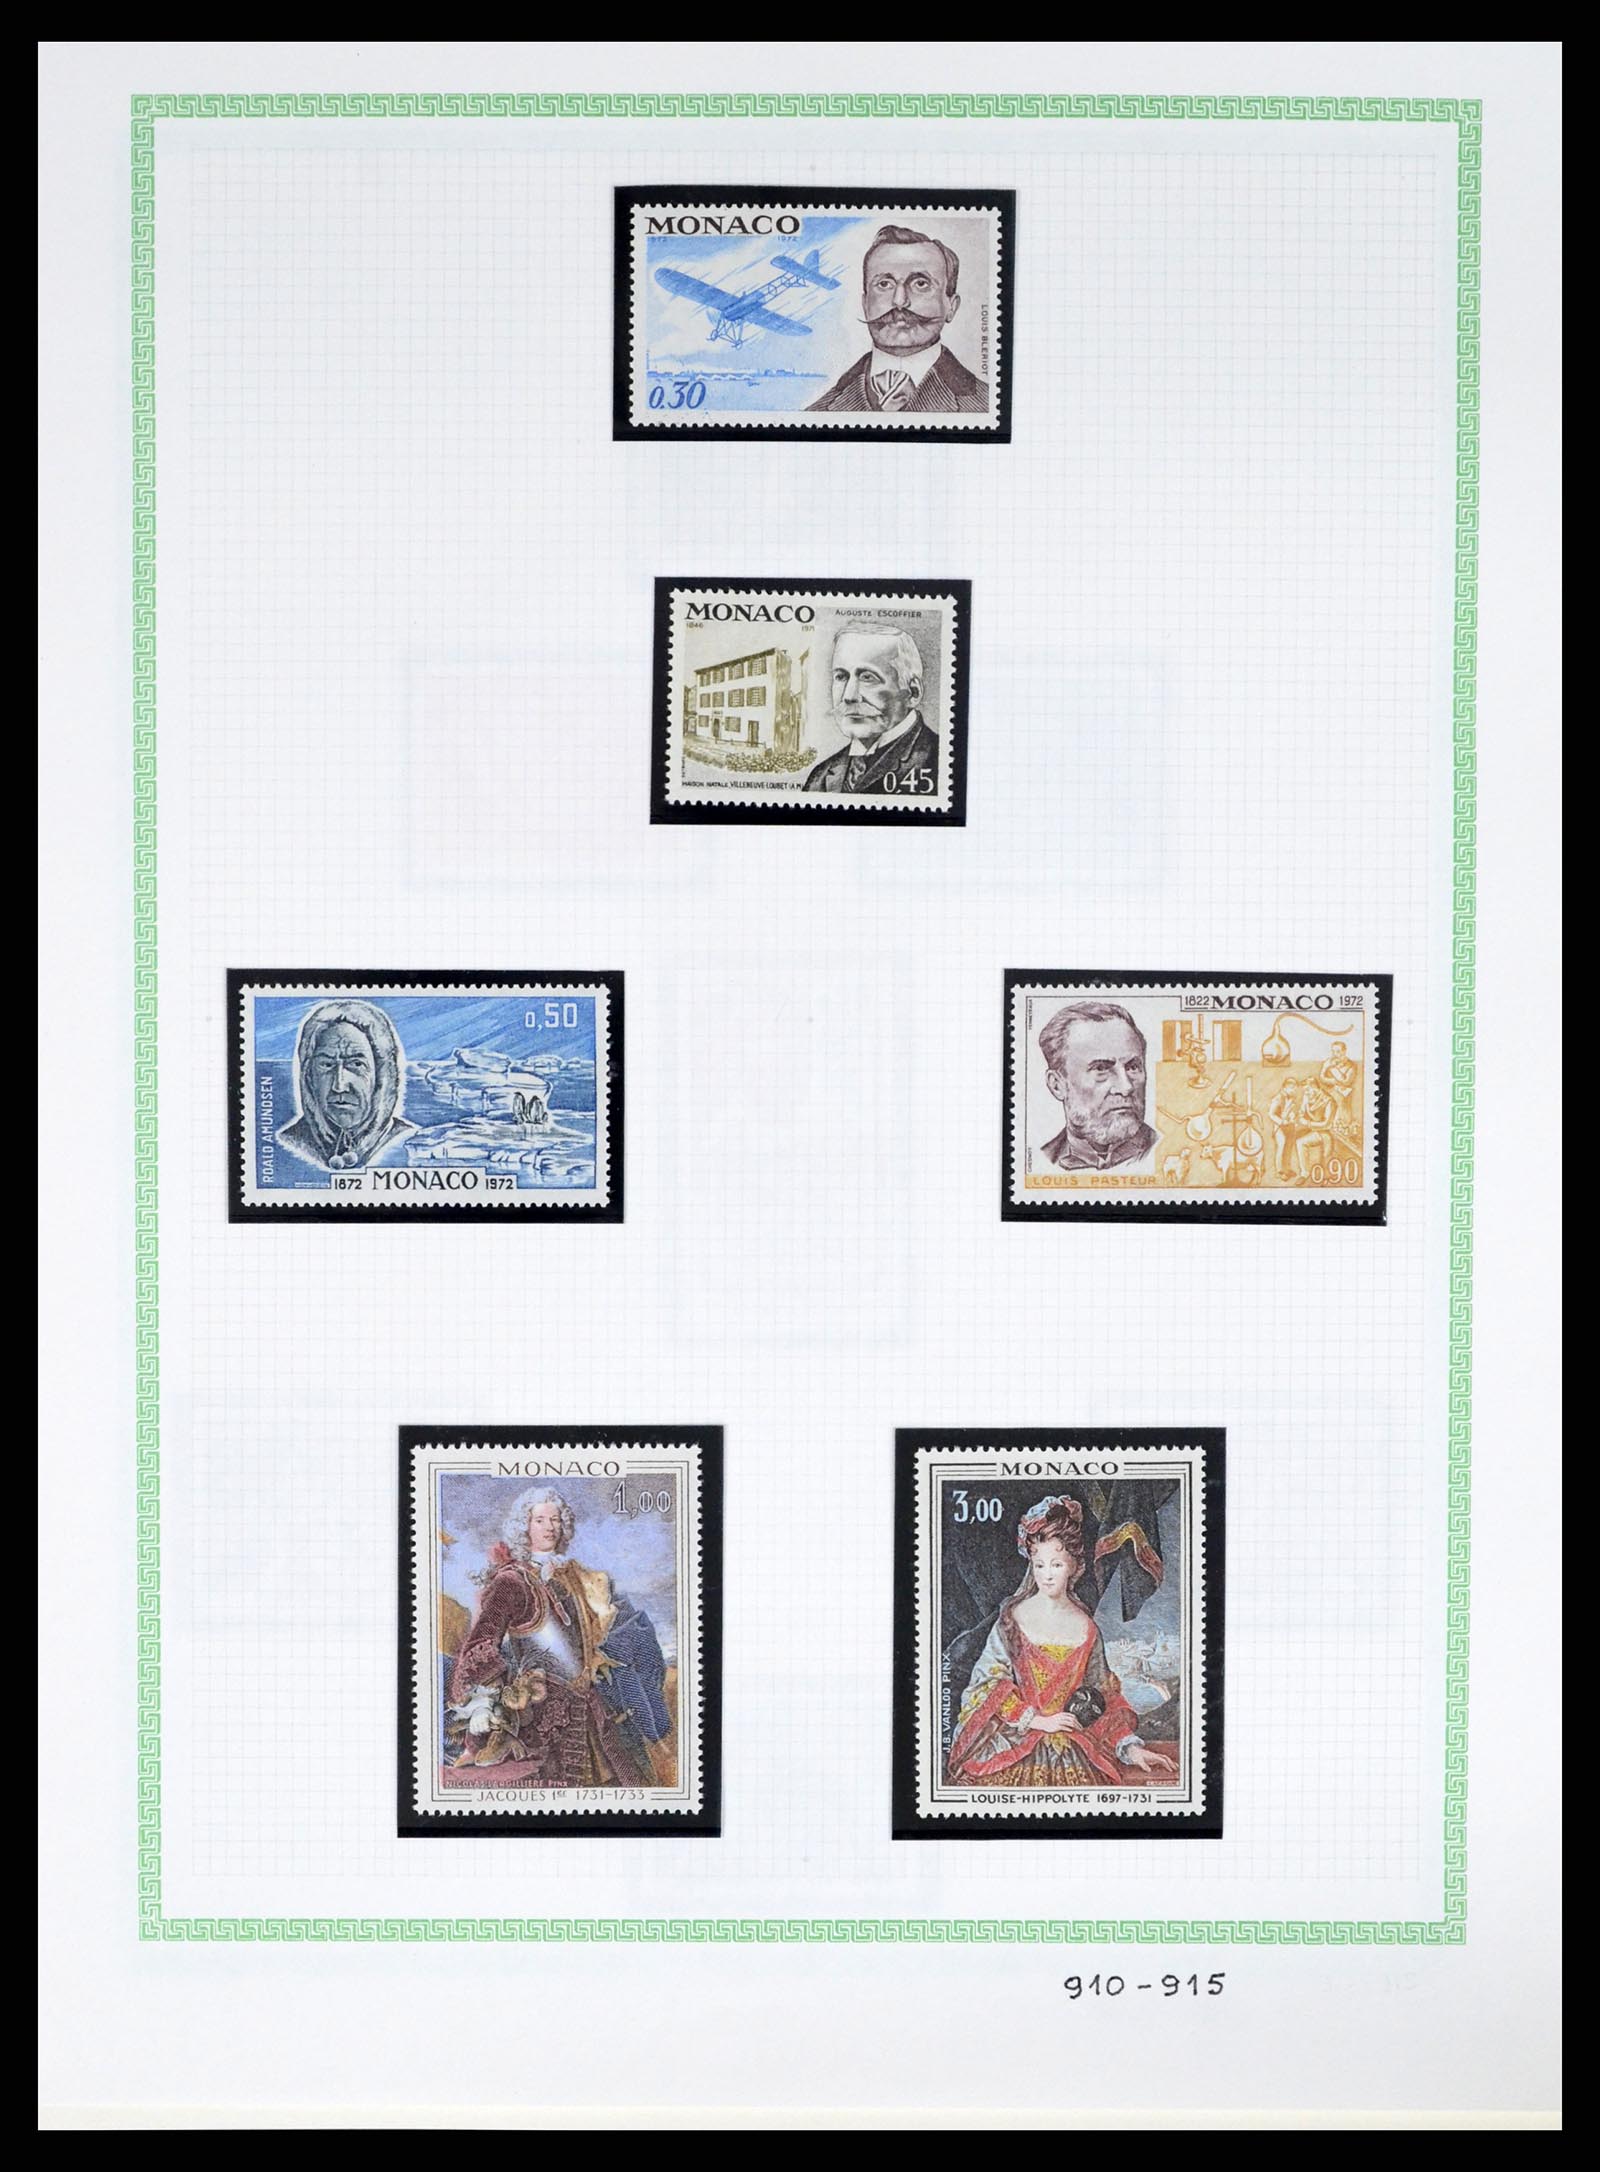 37380 092 - Stamp collection 37380 Monaco 1921-2015.